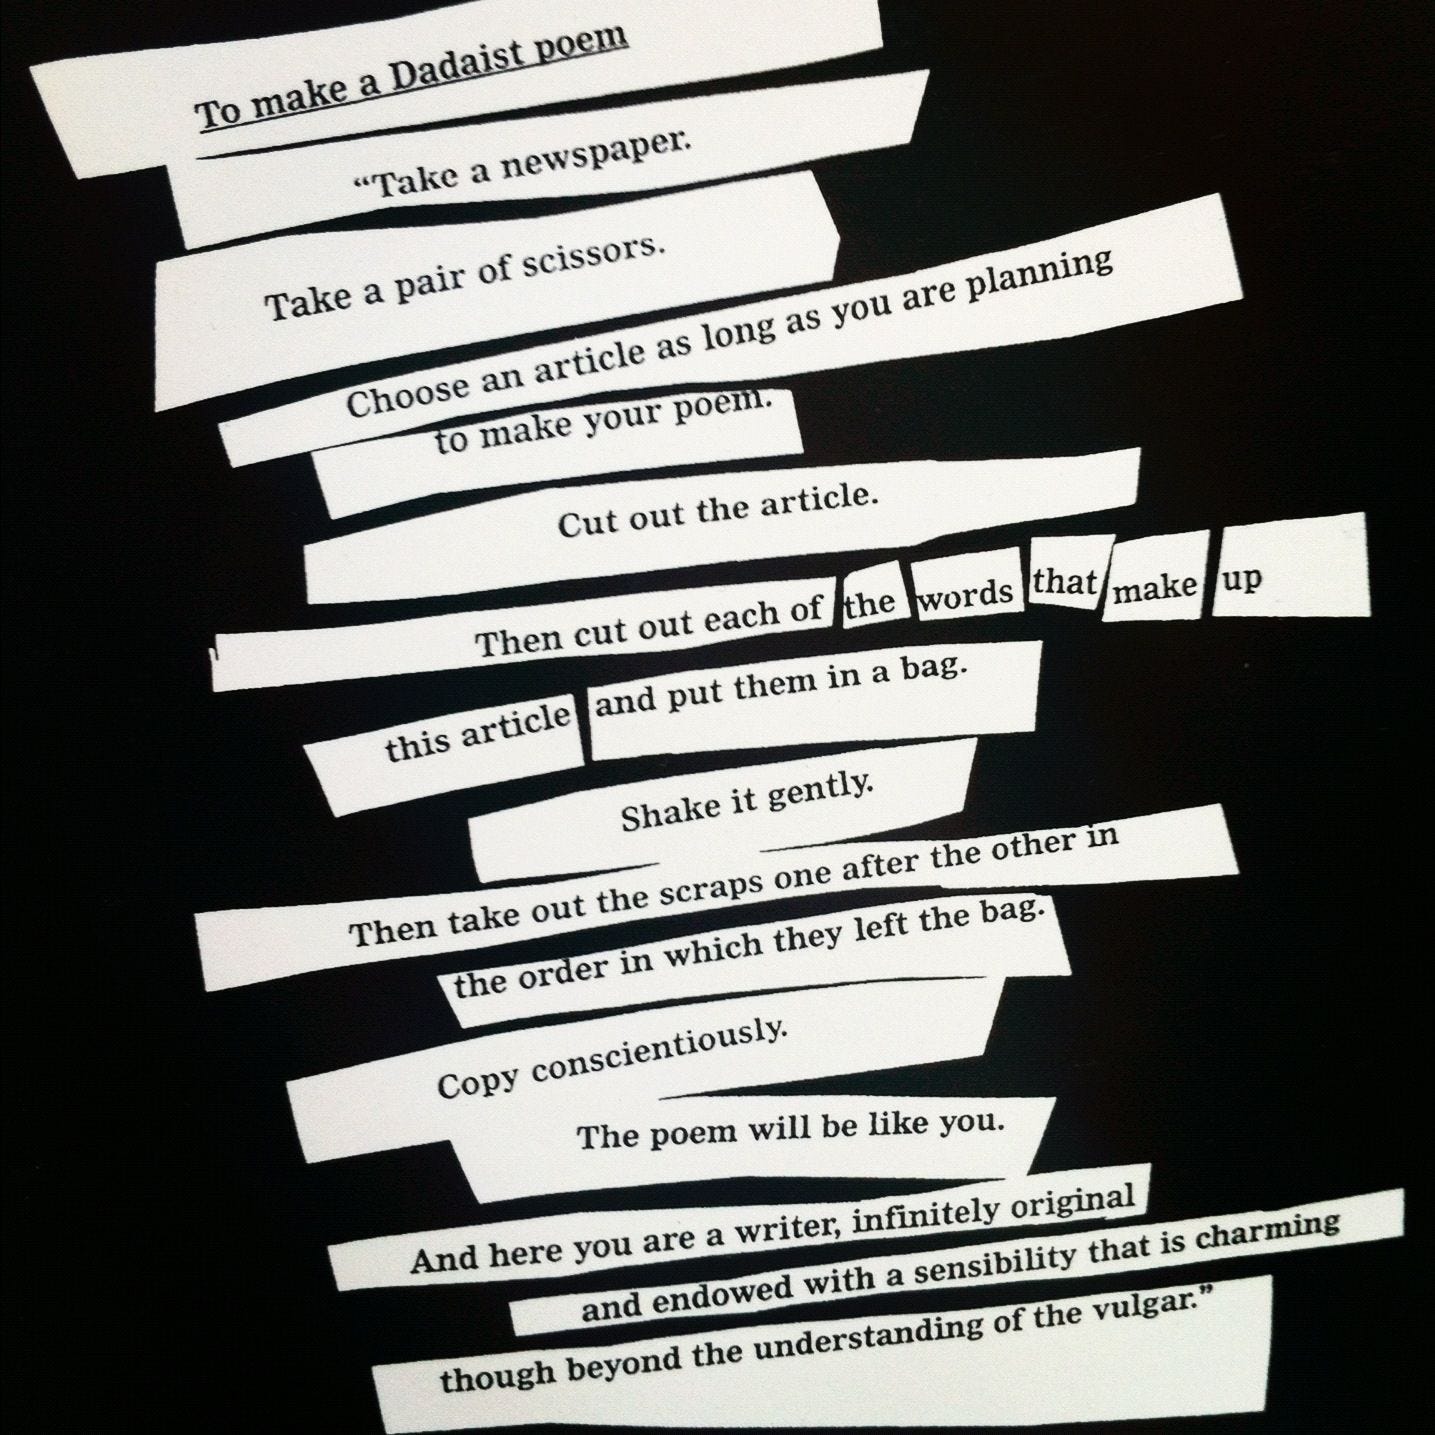 to-make-a-dadaist-poem-by-tristan-tzara.jpg (1435×1435) | Tristan tzara,  Poems, Dada poetry